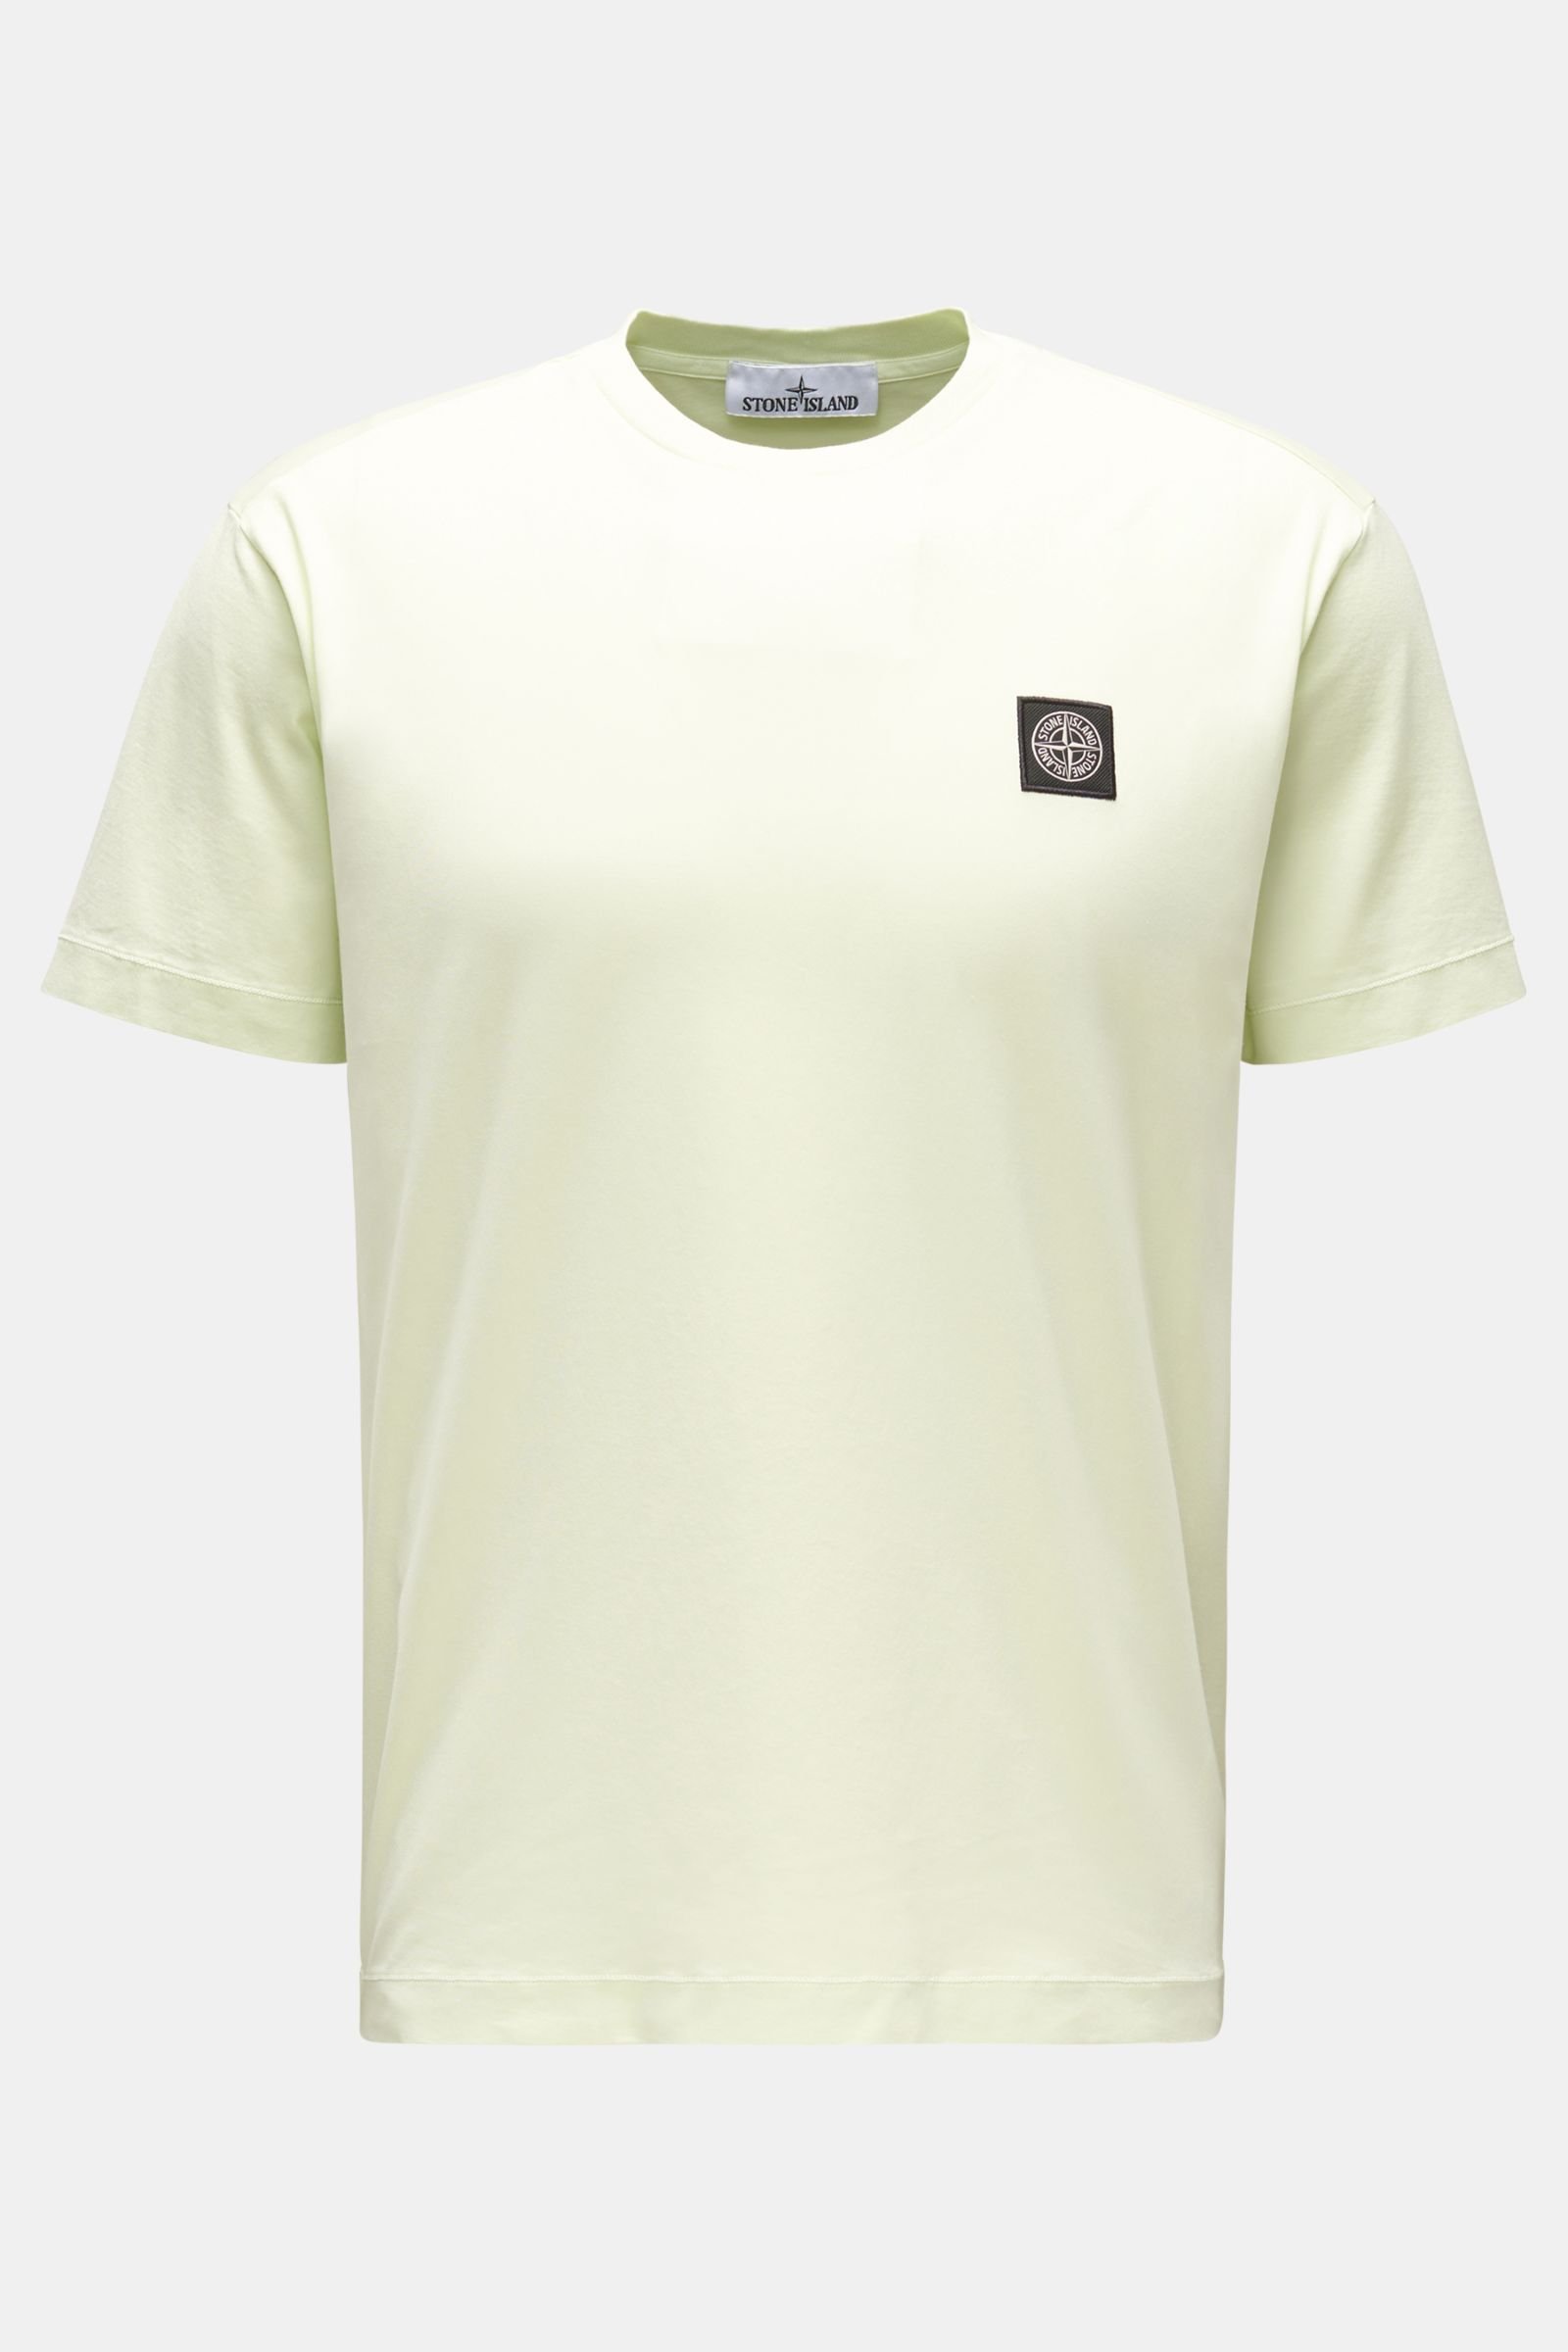 Rundhals-T-Shirt neongrün